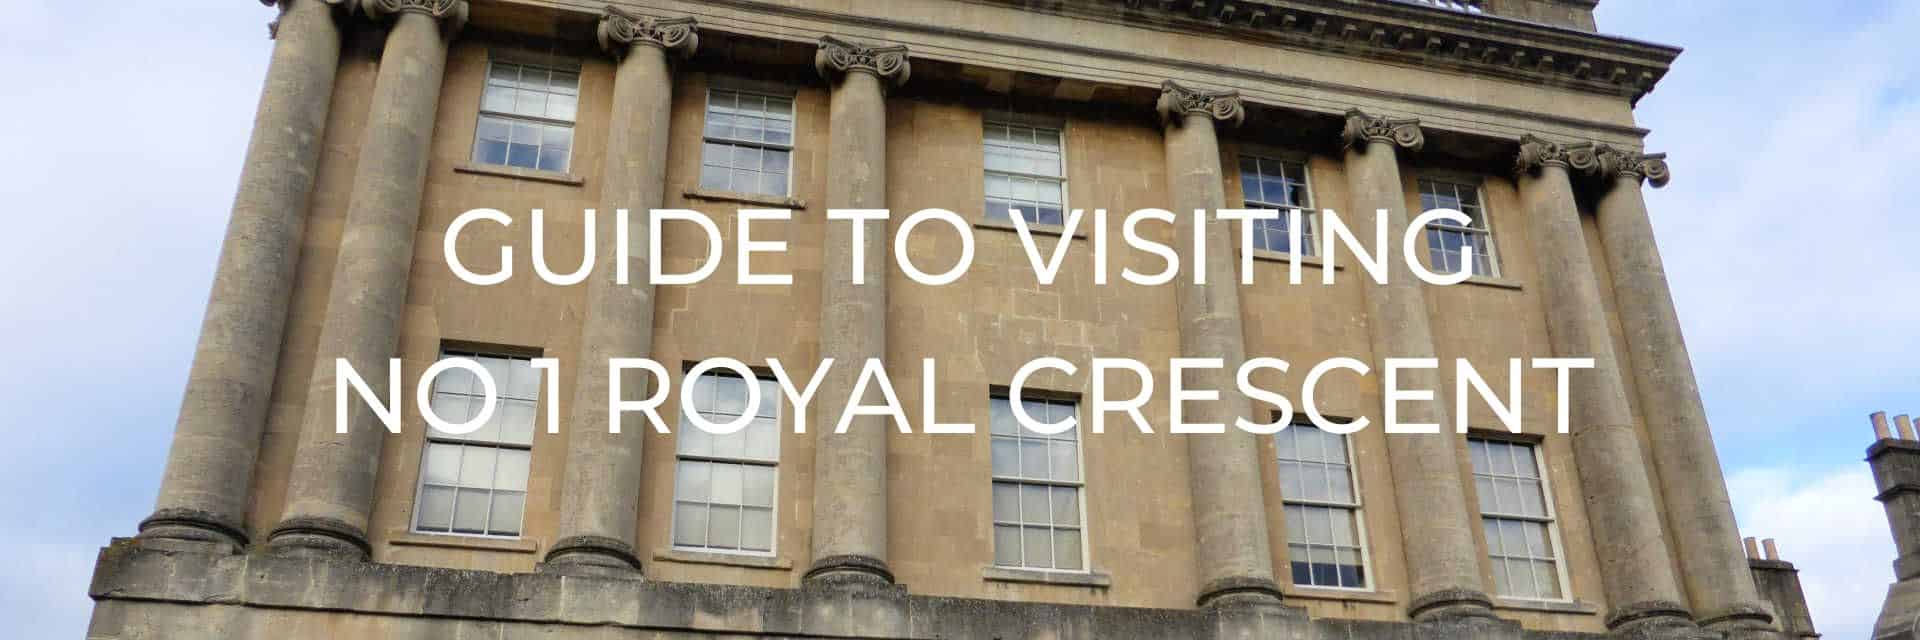 Guide to Visiting No 1 Royal Crescent Desktop Image